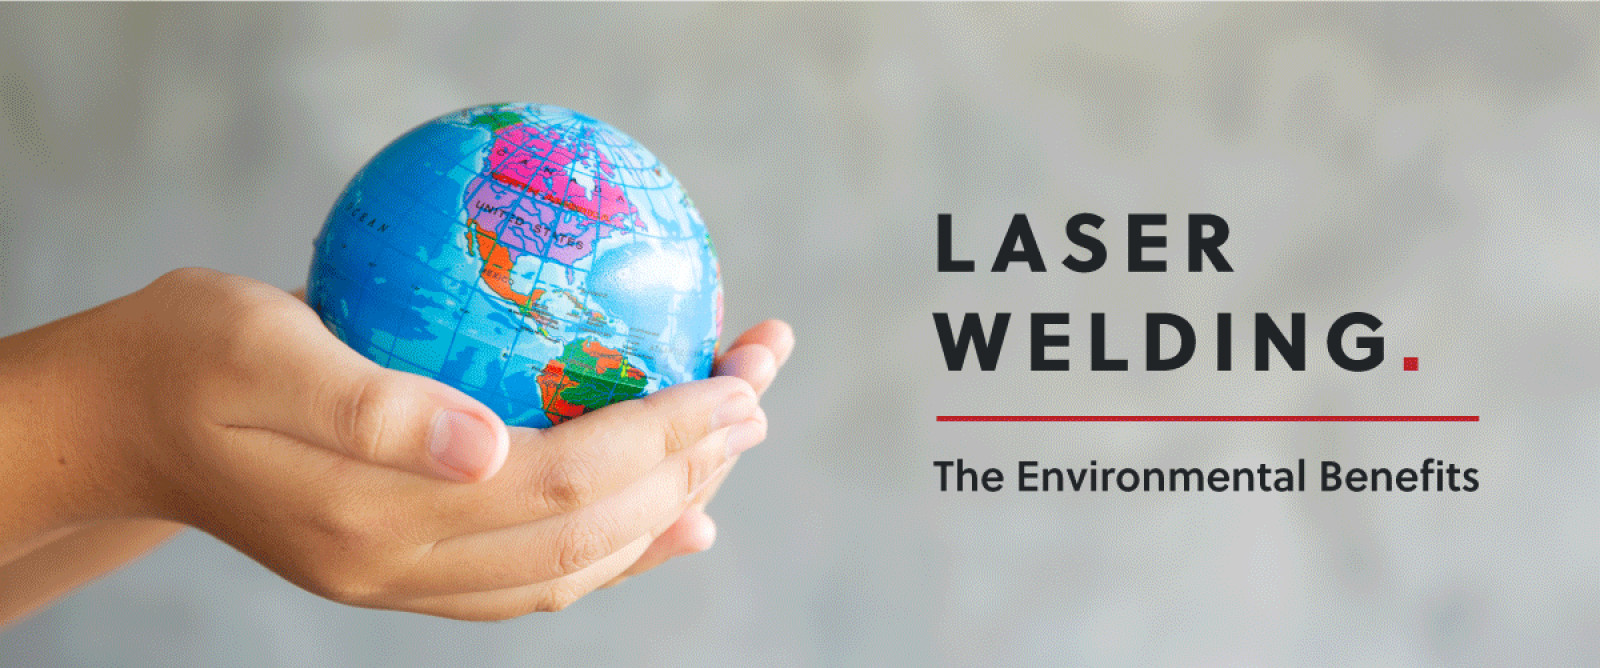 Laser Welding – The Environmental Benefits